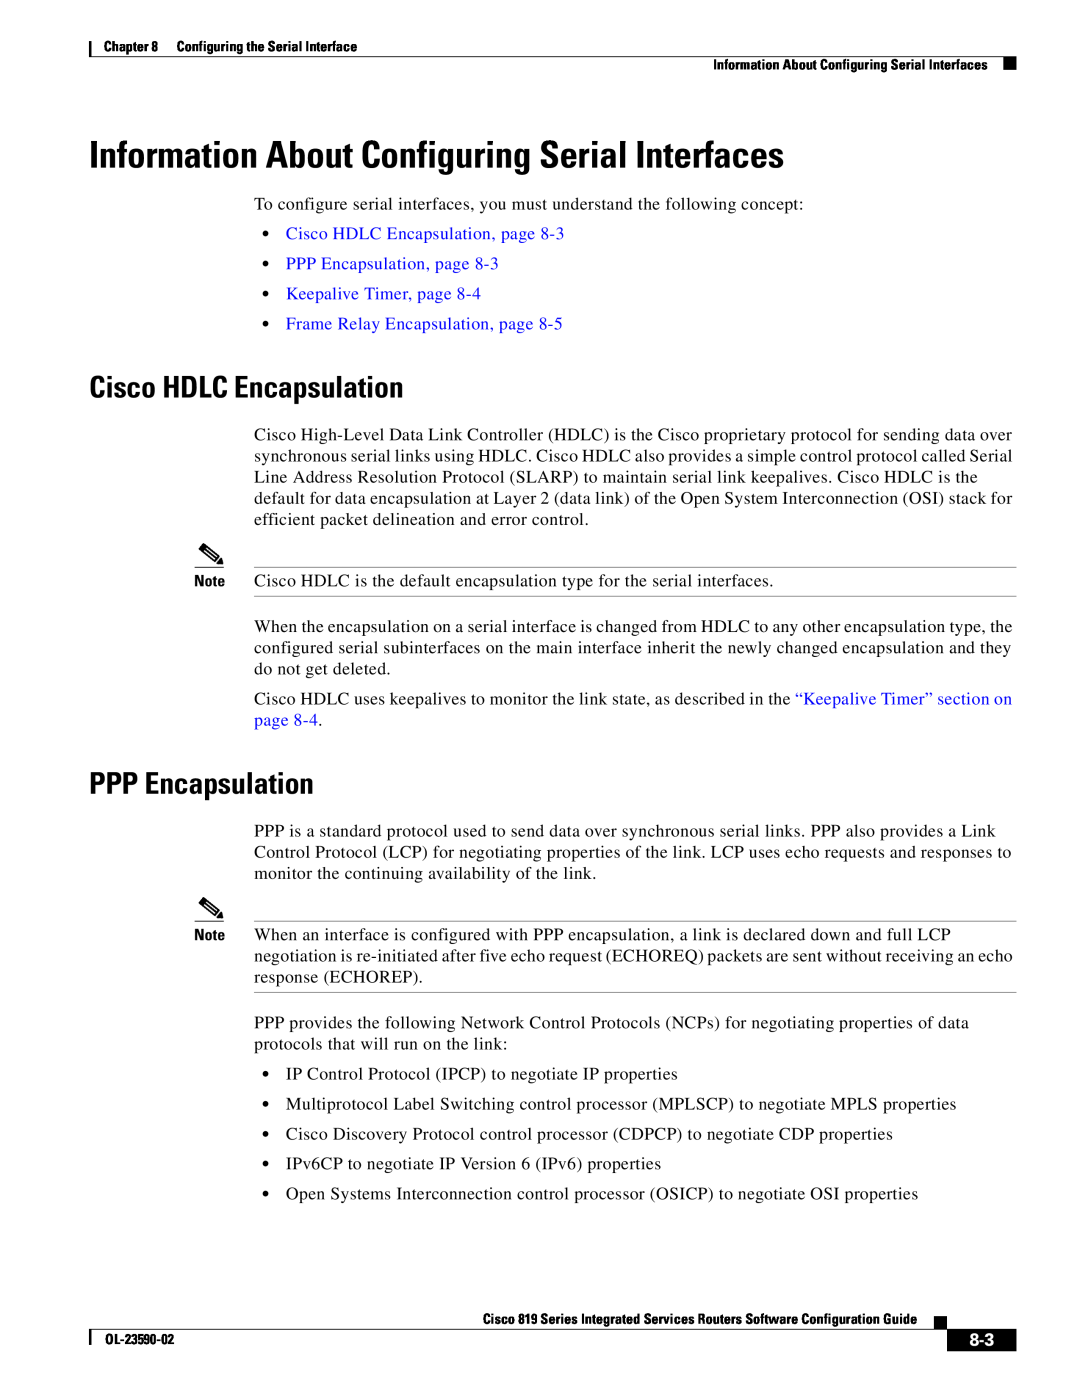 Cisco Systems C819HG4GVK9 Information About Configuring Serial Interfaces, Cisco HDLC Encapsulation, PPP Encapsulation 